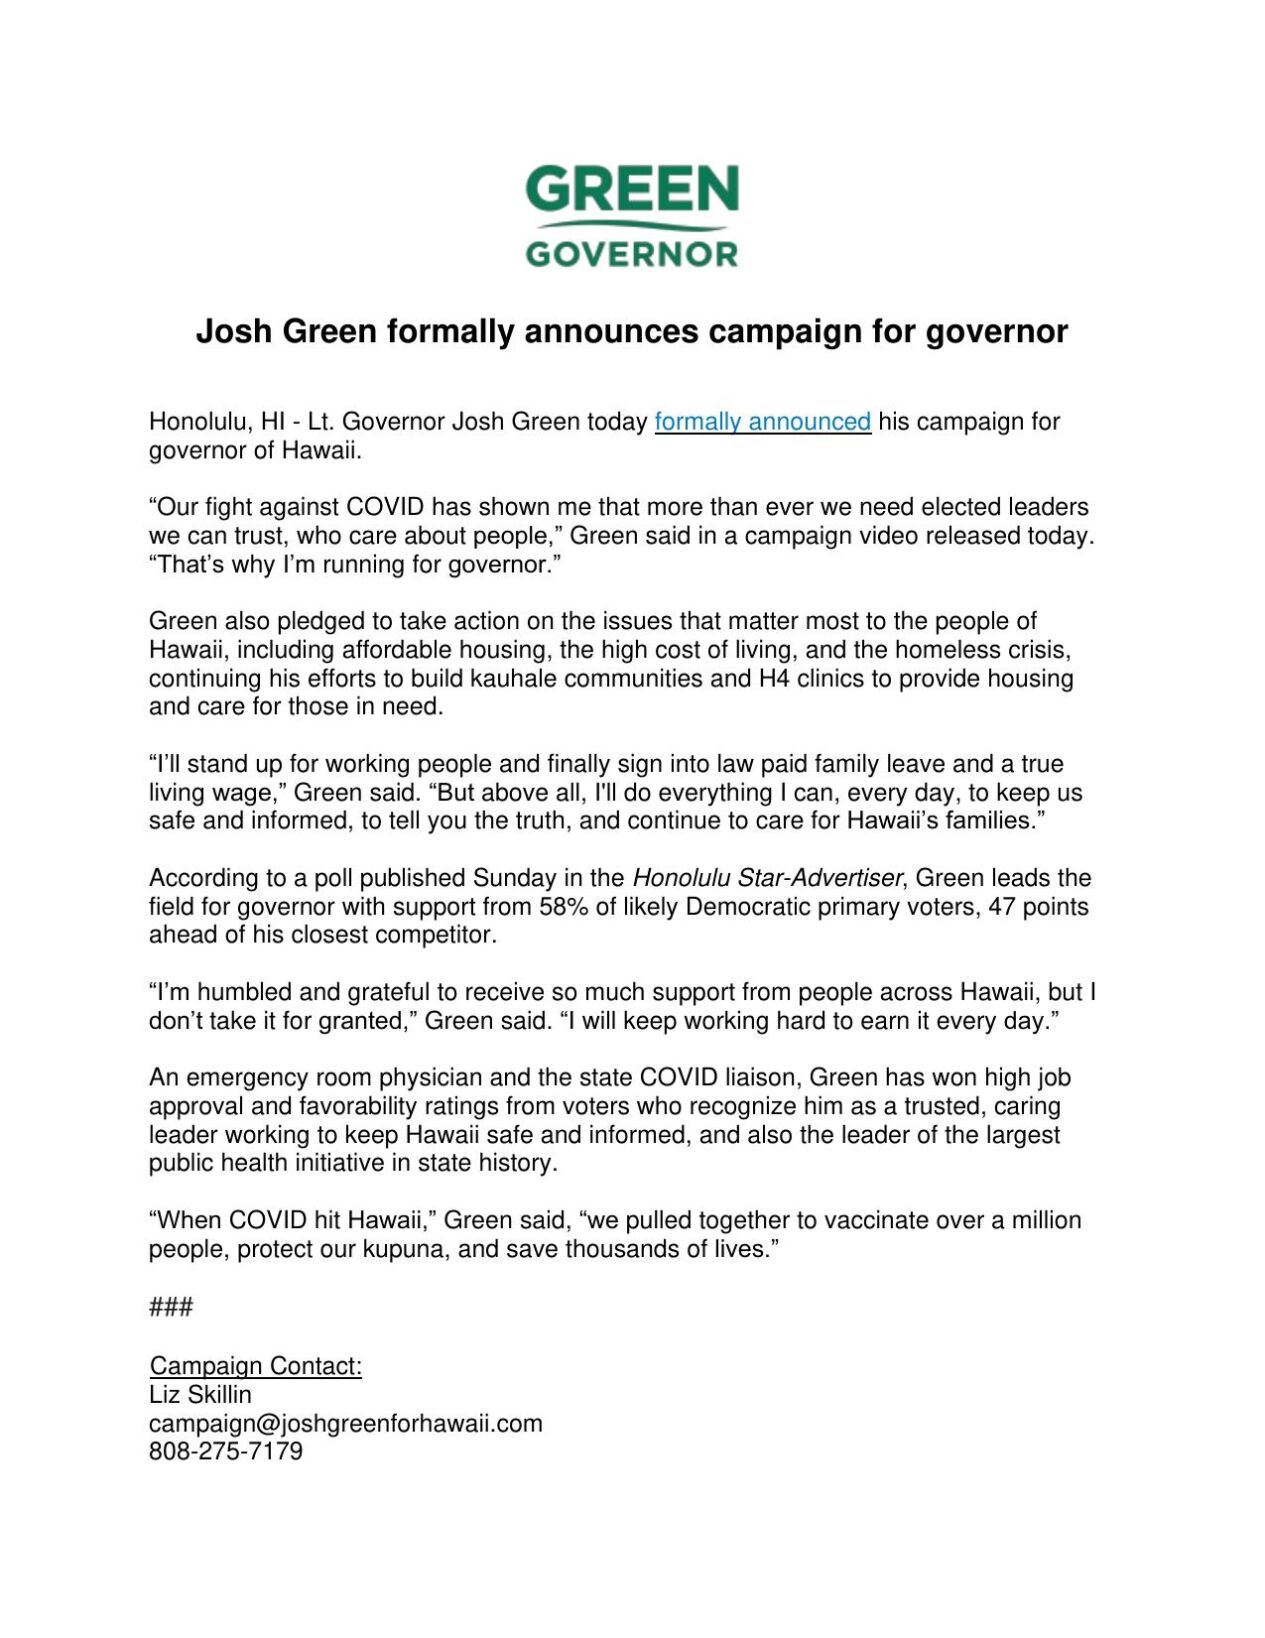 Josh Green announces run for governor